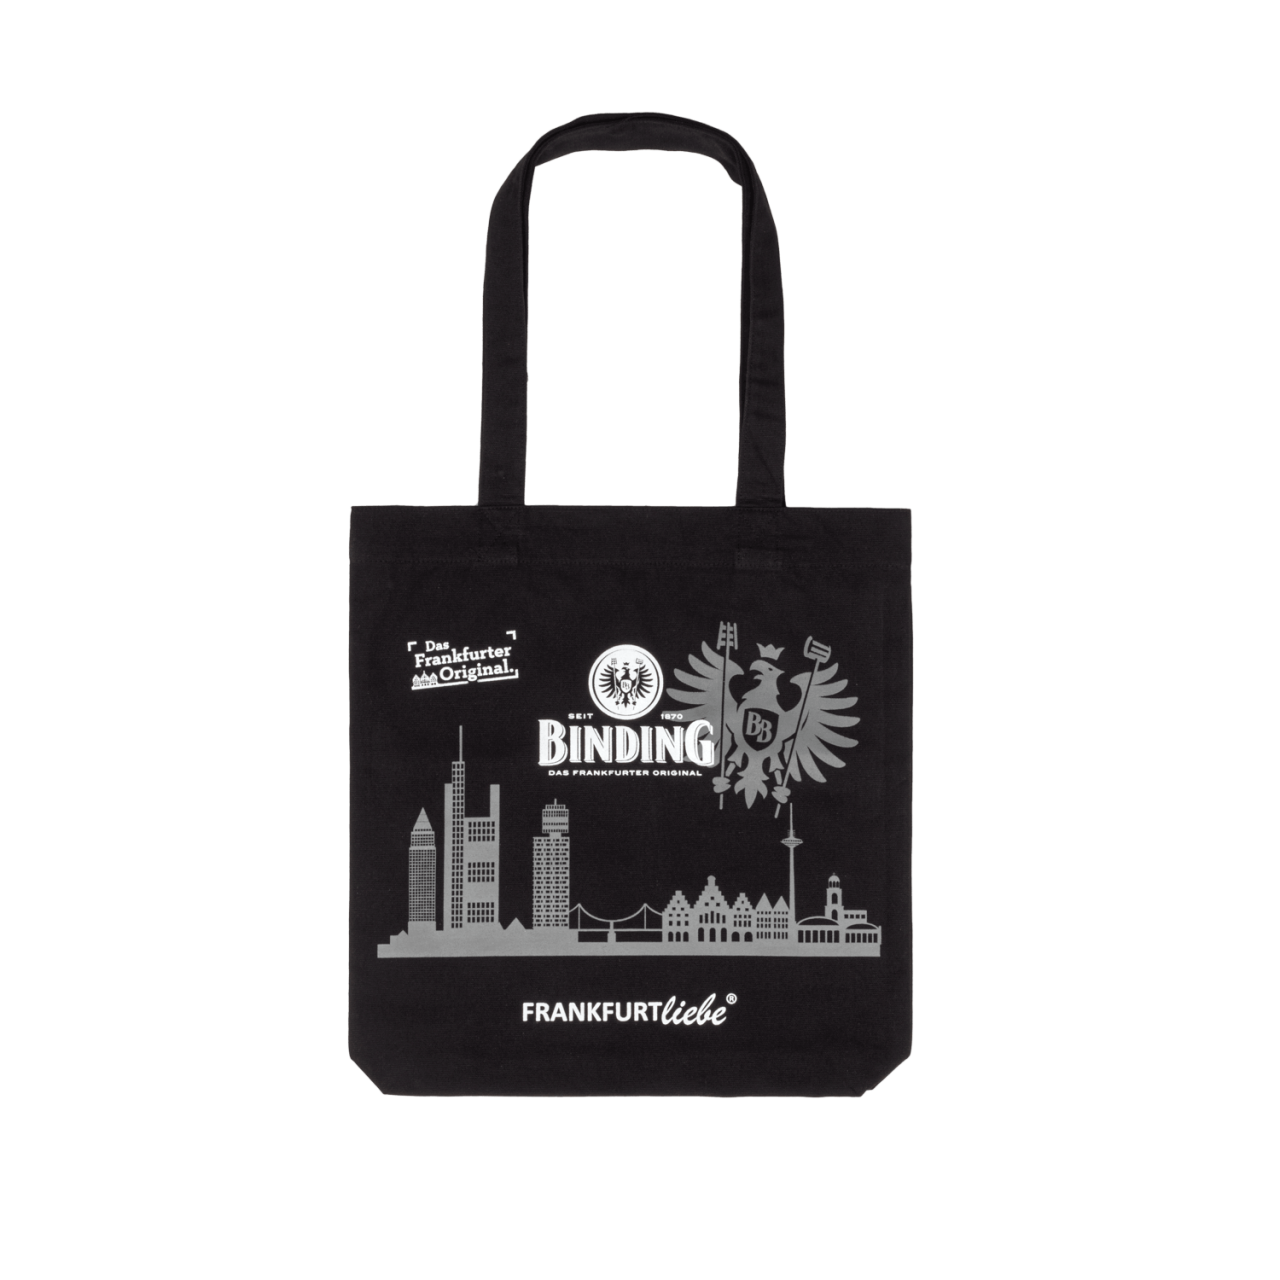 Binding City Bag meets Frankfurtliebe